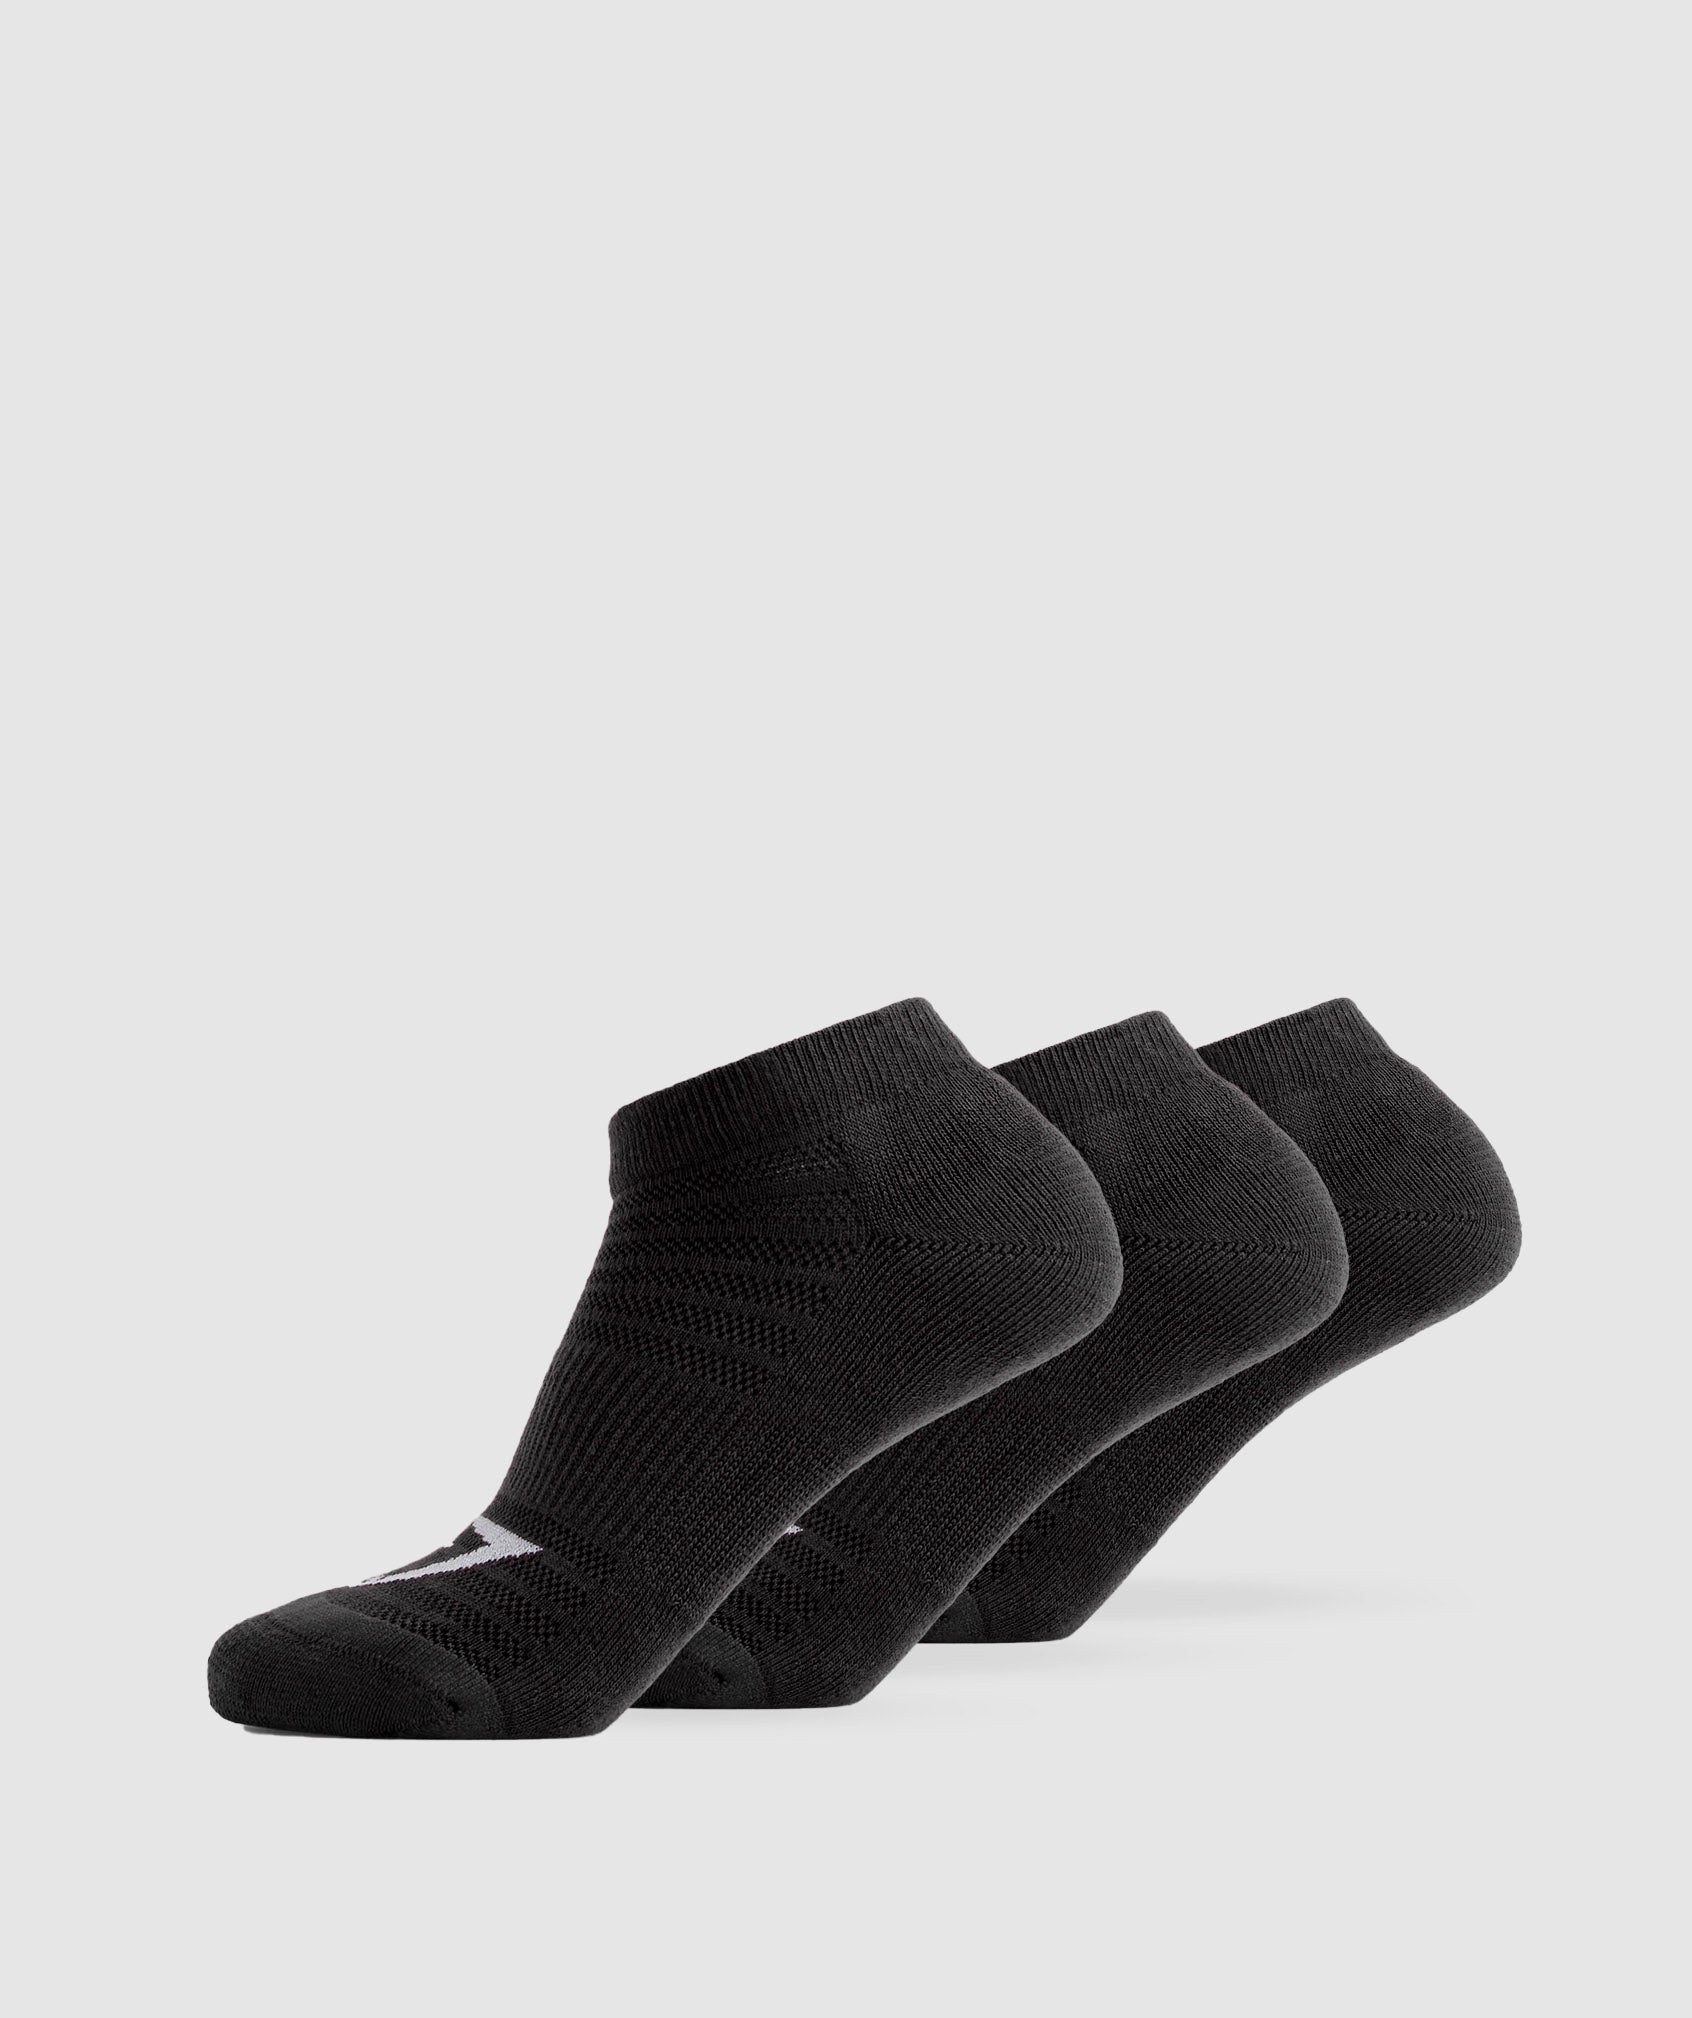 Ankle Socks 3pk product image 1